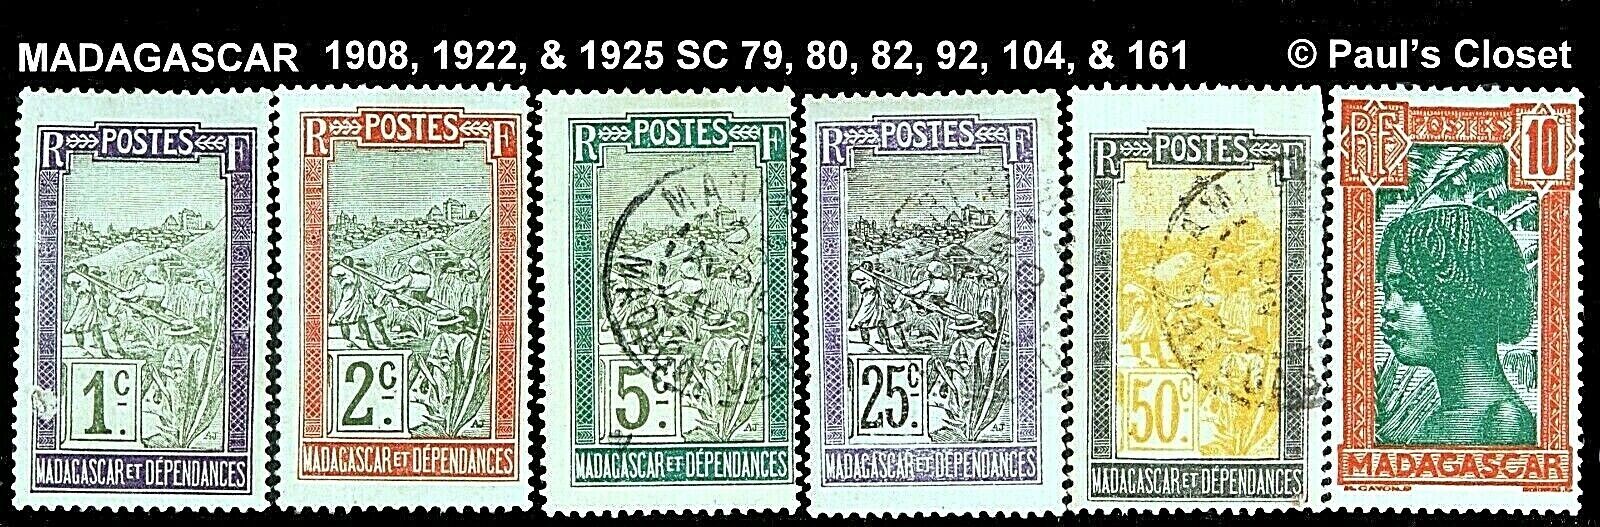 MADAGASCAR 1908 -1925 SC 79, 80, 92 &104 TRANS IN SEDAN CHAIR MNH (2) UNG (2) FV Без бренда